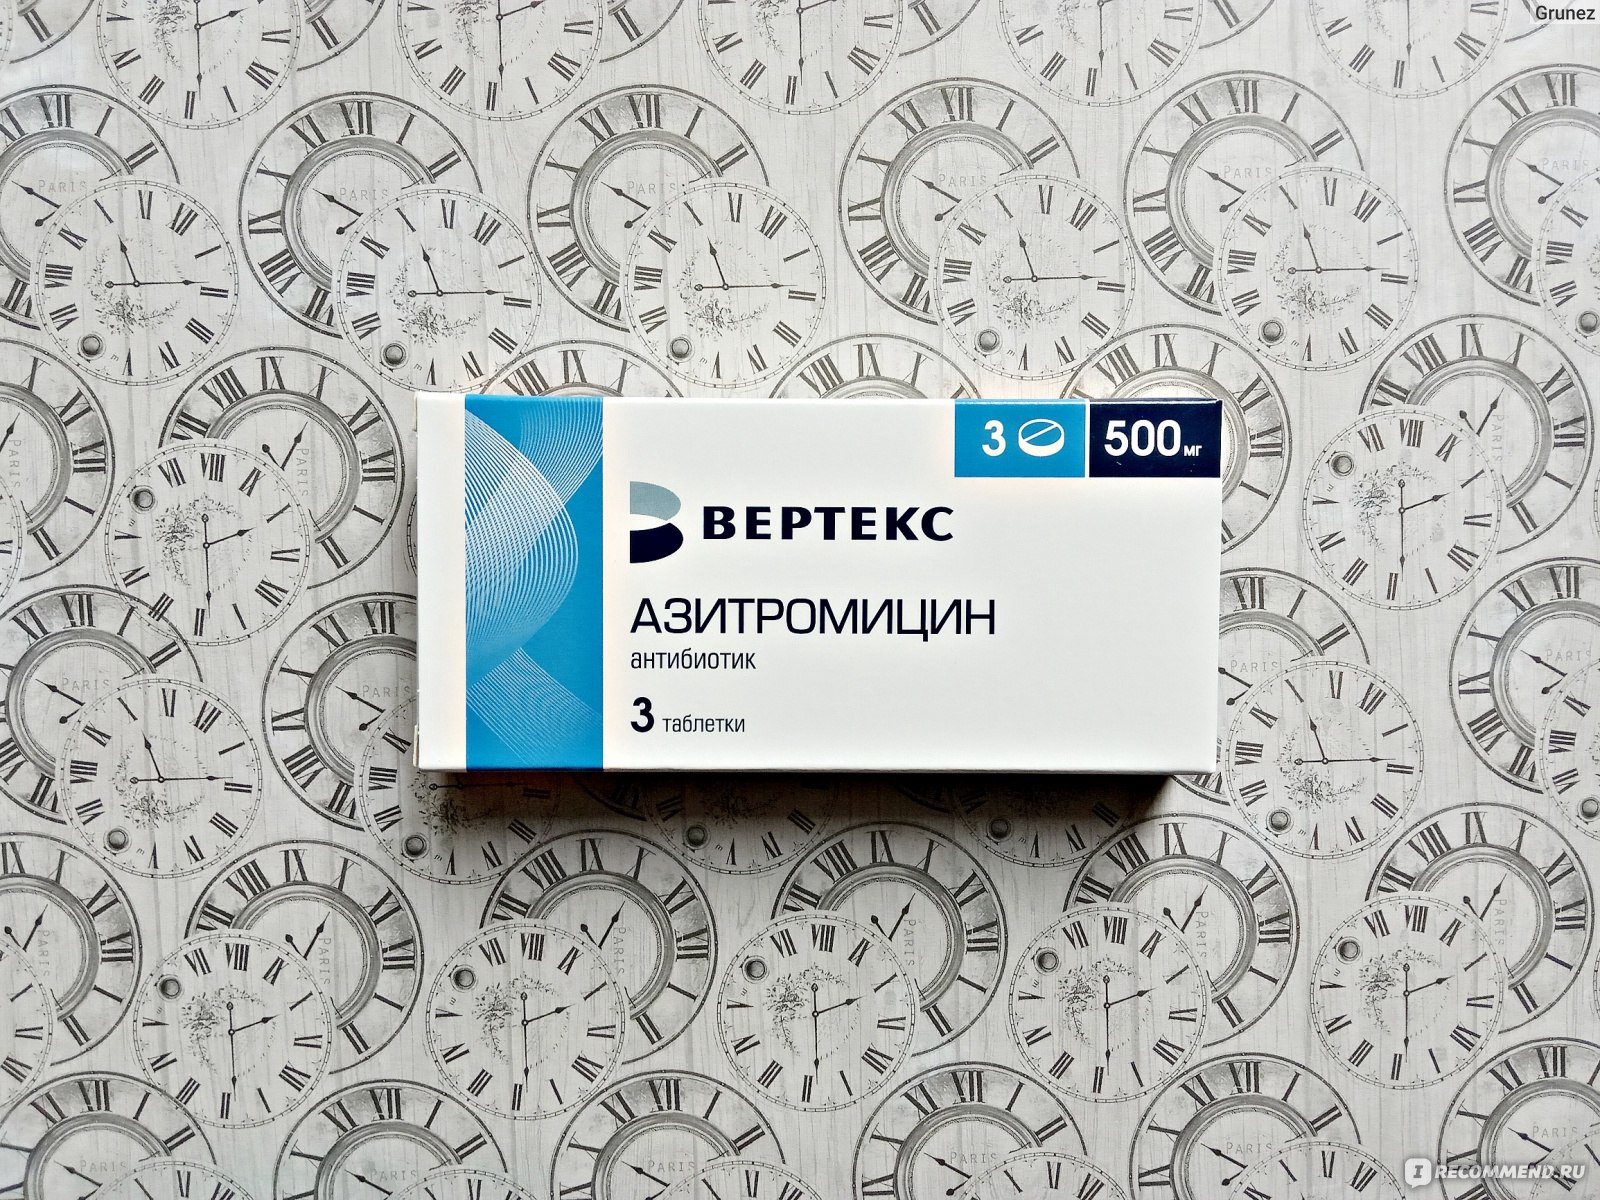 Антибиотик Вертекс Азитромицин 500 мг - «Антибиотик, который смог .